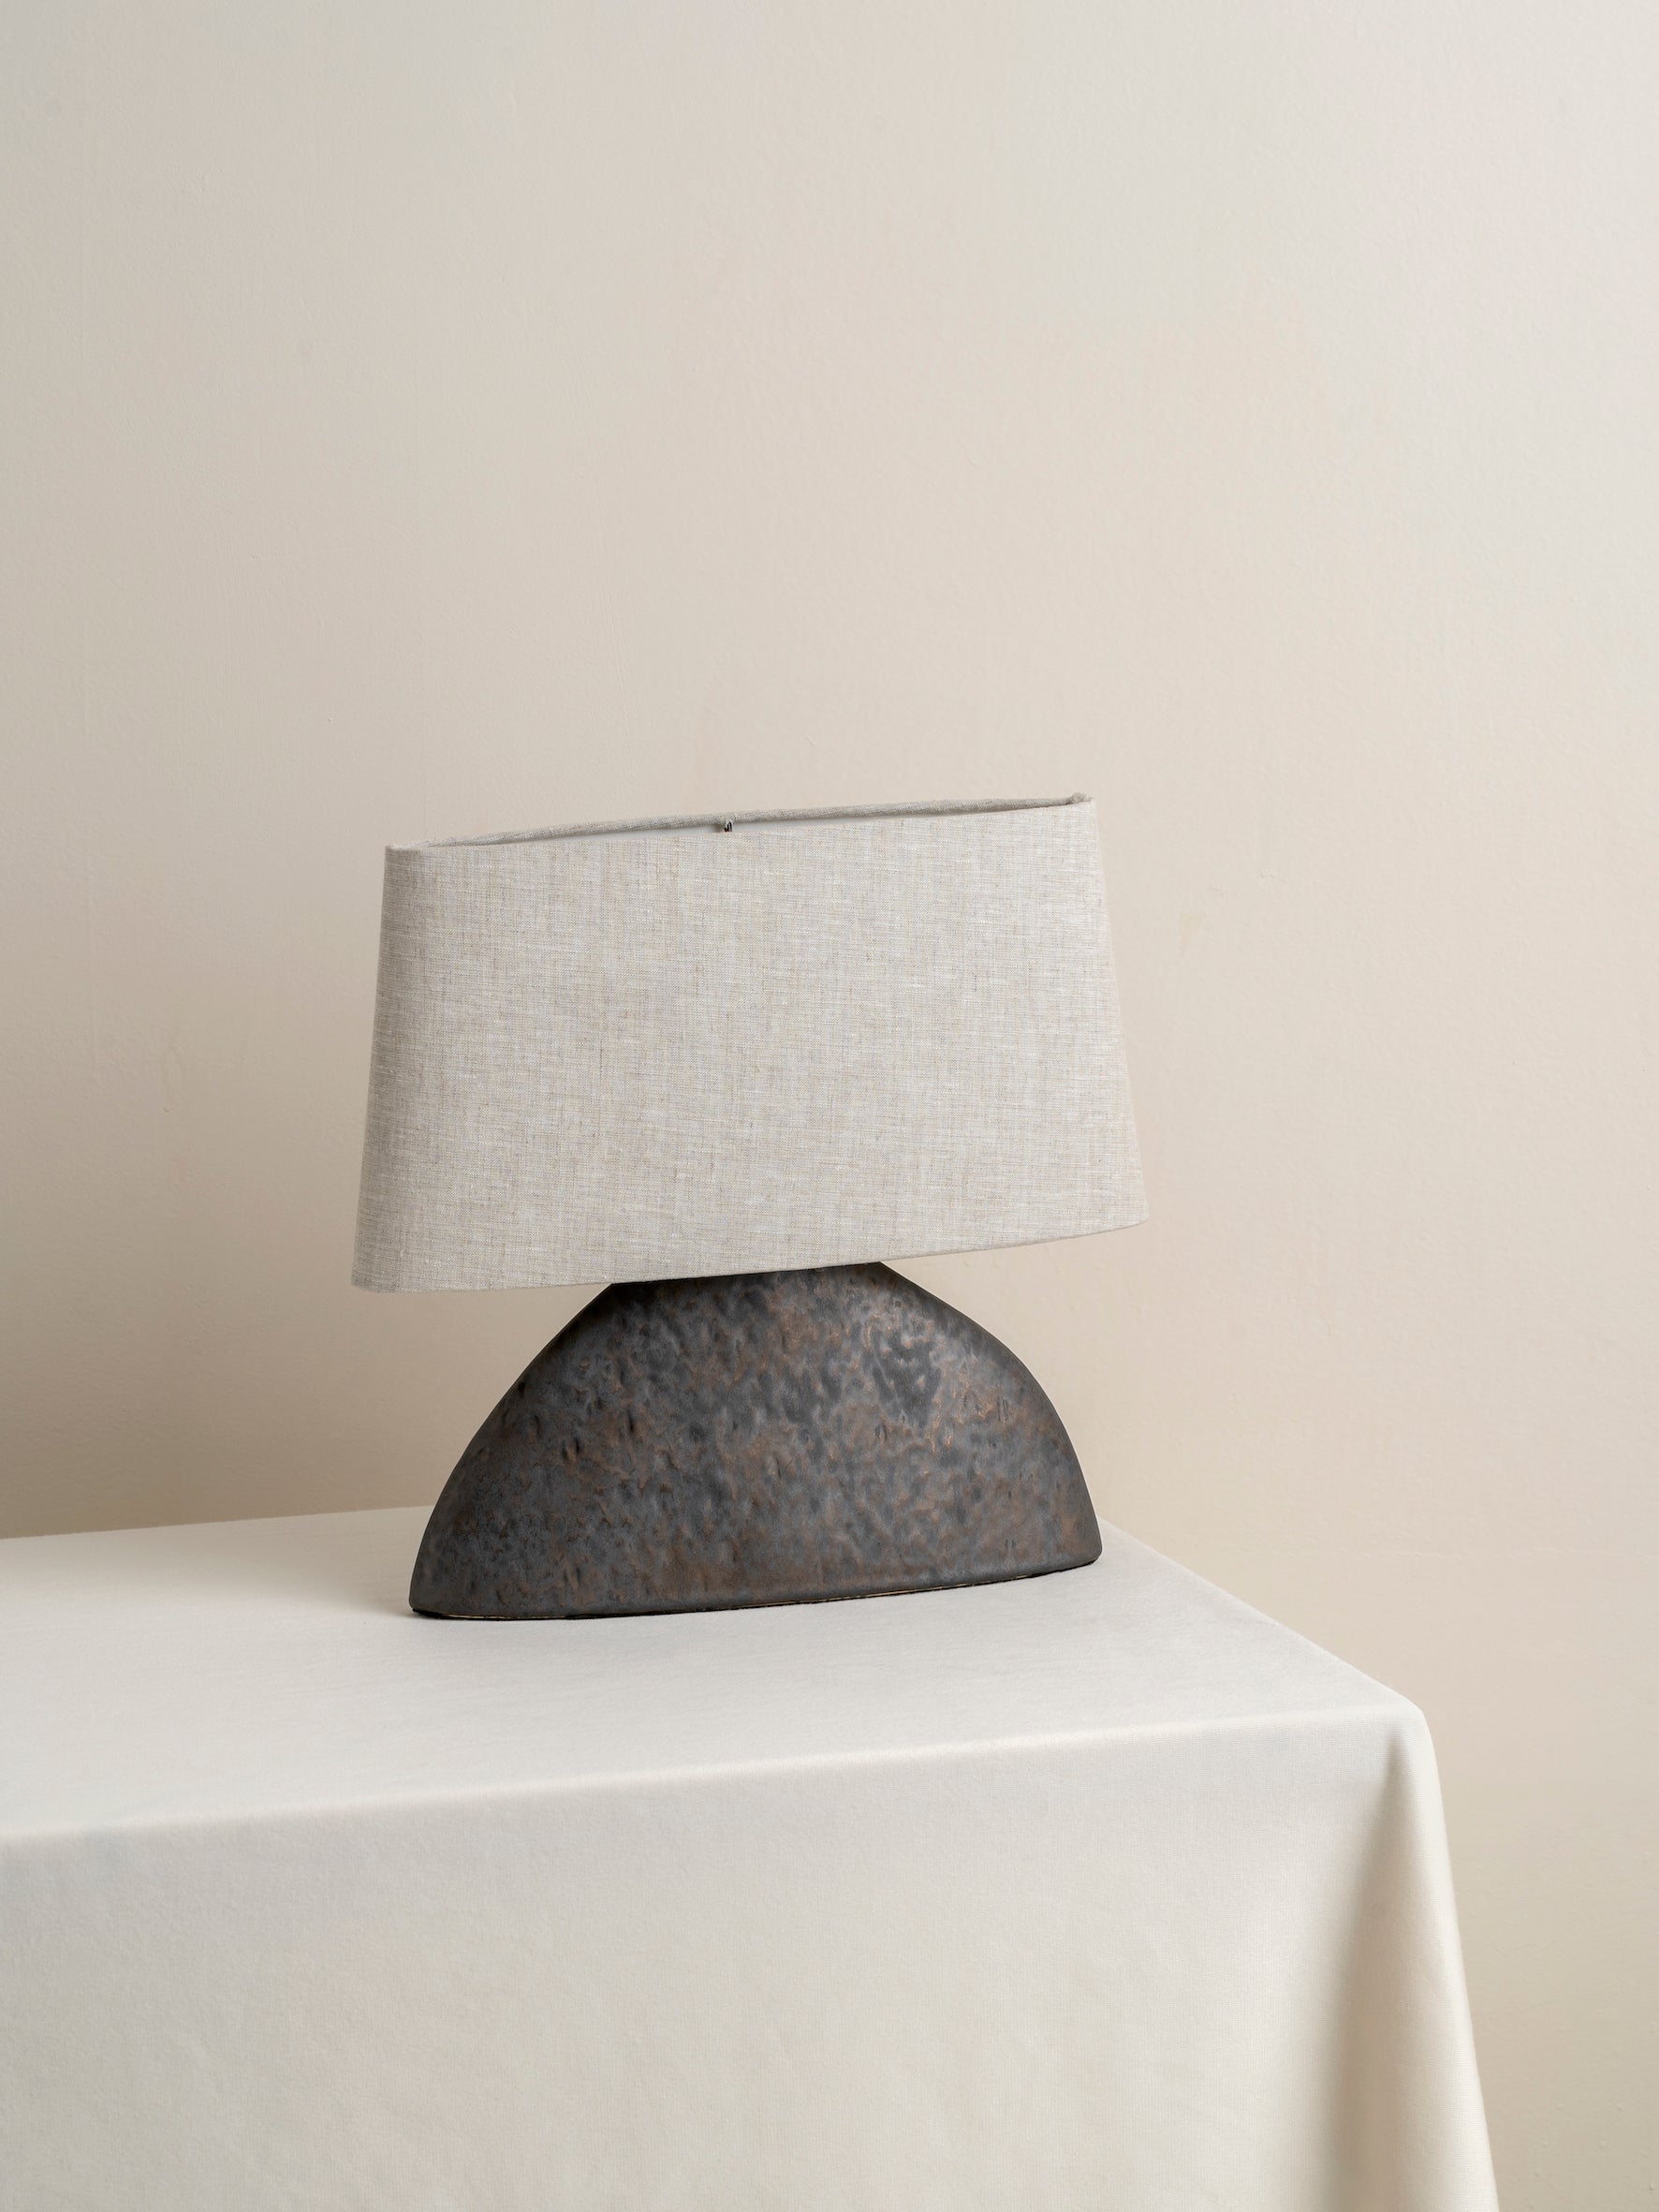 Pitti - bronze ceramic table lamp | Table Lamp | Lights & Lamps | UK | Modern Affordable Designer Lighting